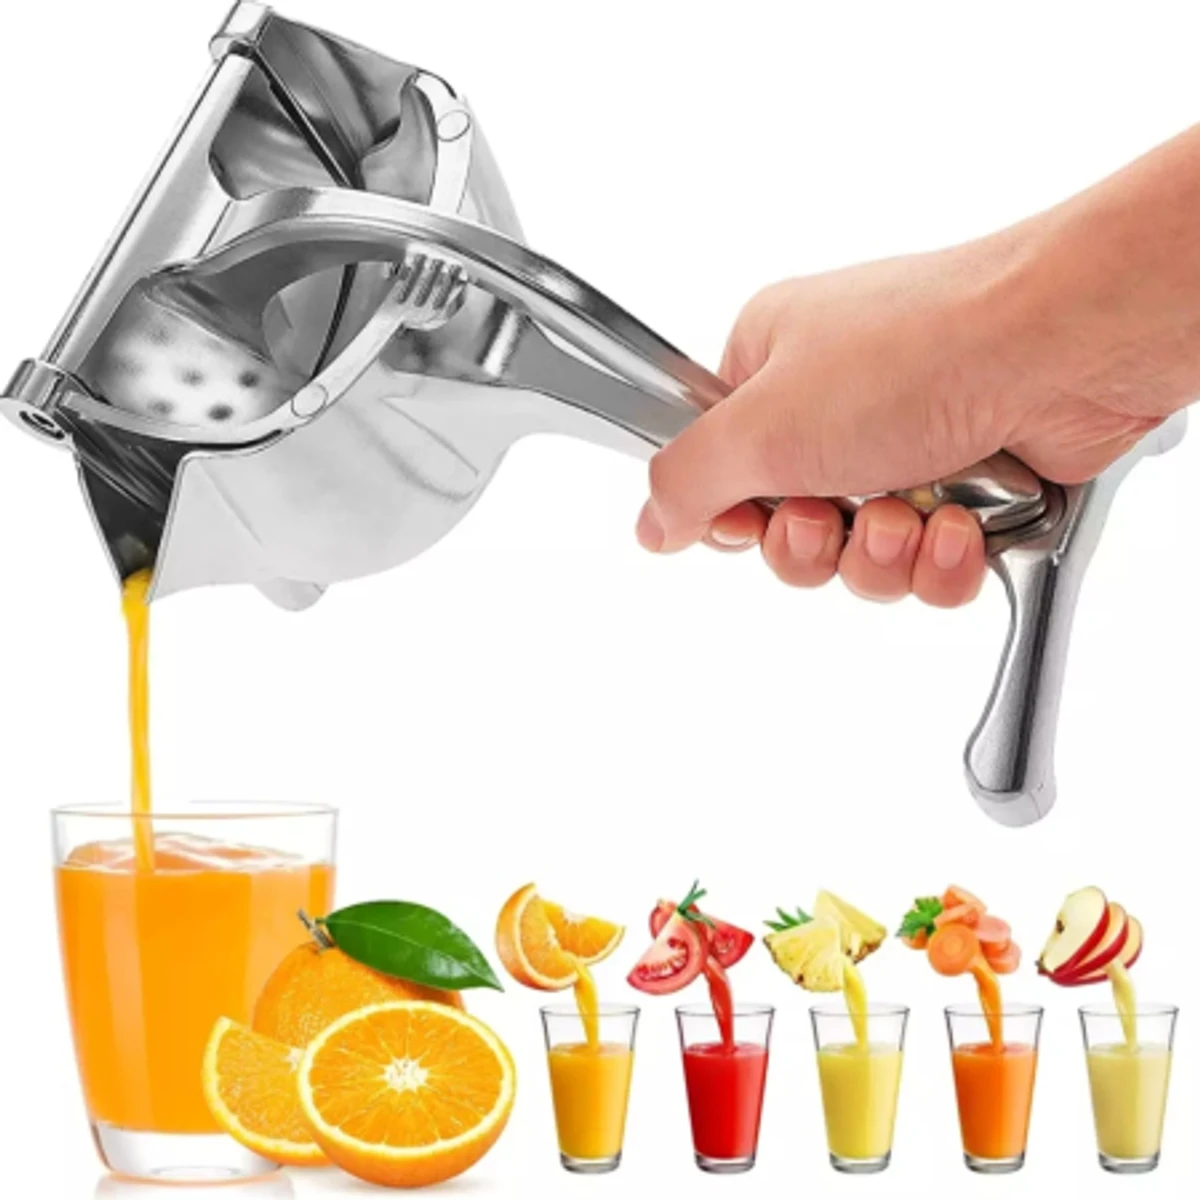 Aluminum Manual Juicer Hand Fruits Orange Lemon Juice Press Squeezer Fruit Extractor Manual Food Processors Kitchen Fruit Tools